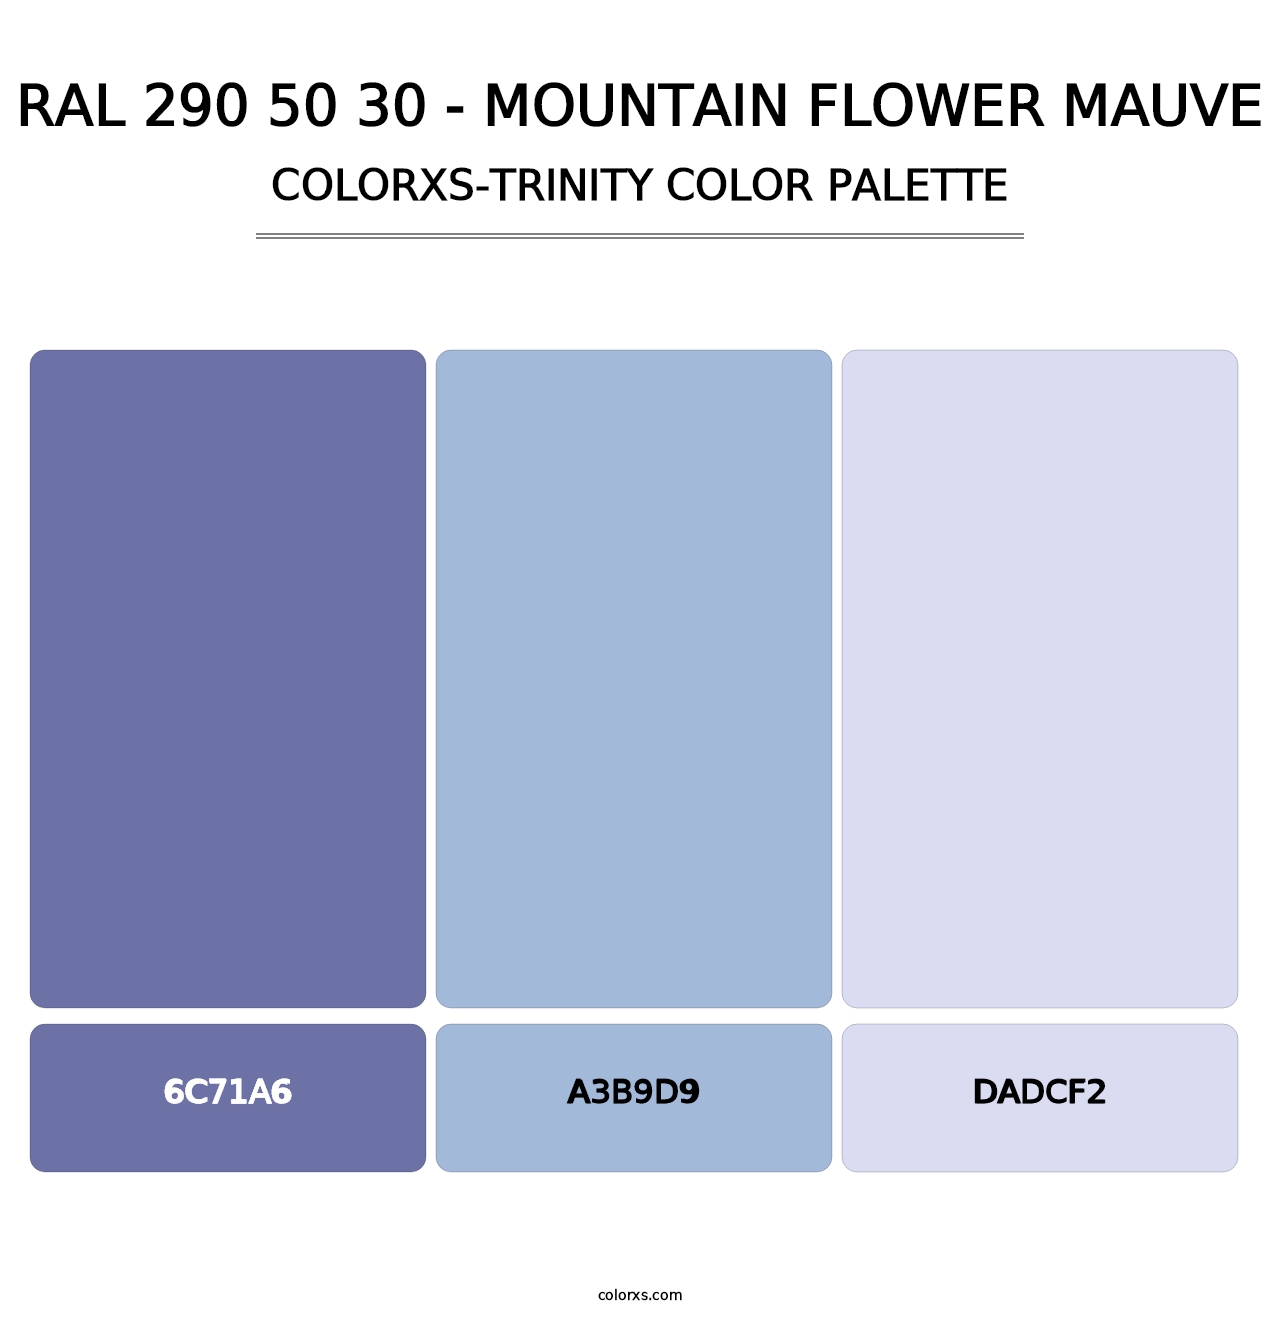 RAL 290 50 30 - Mountain Flower Mauve - Colorxs Trinity Palette